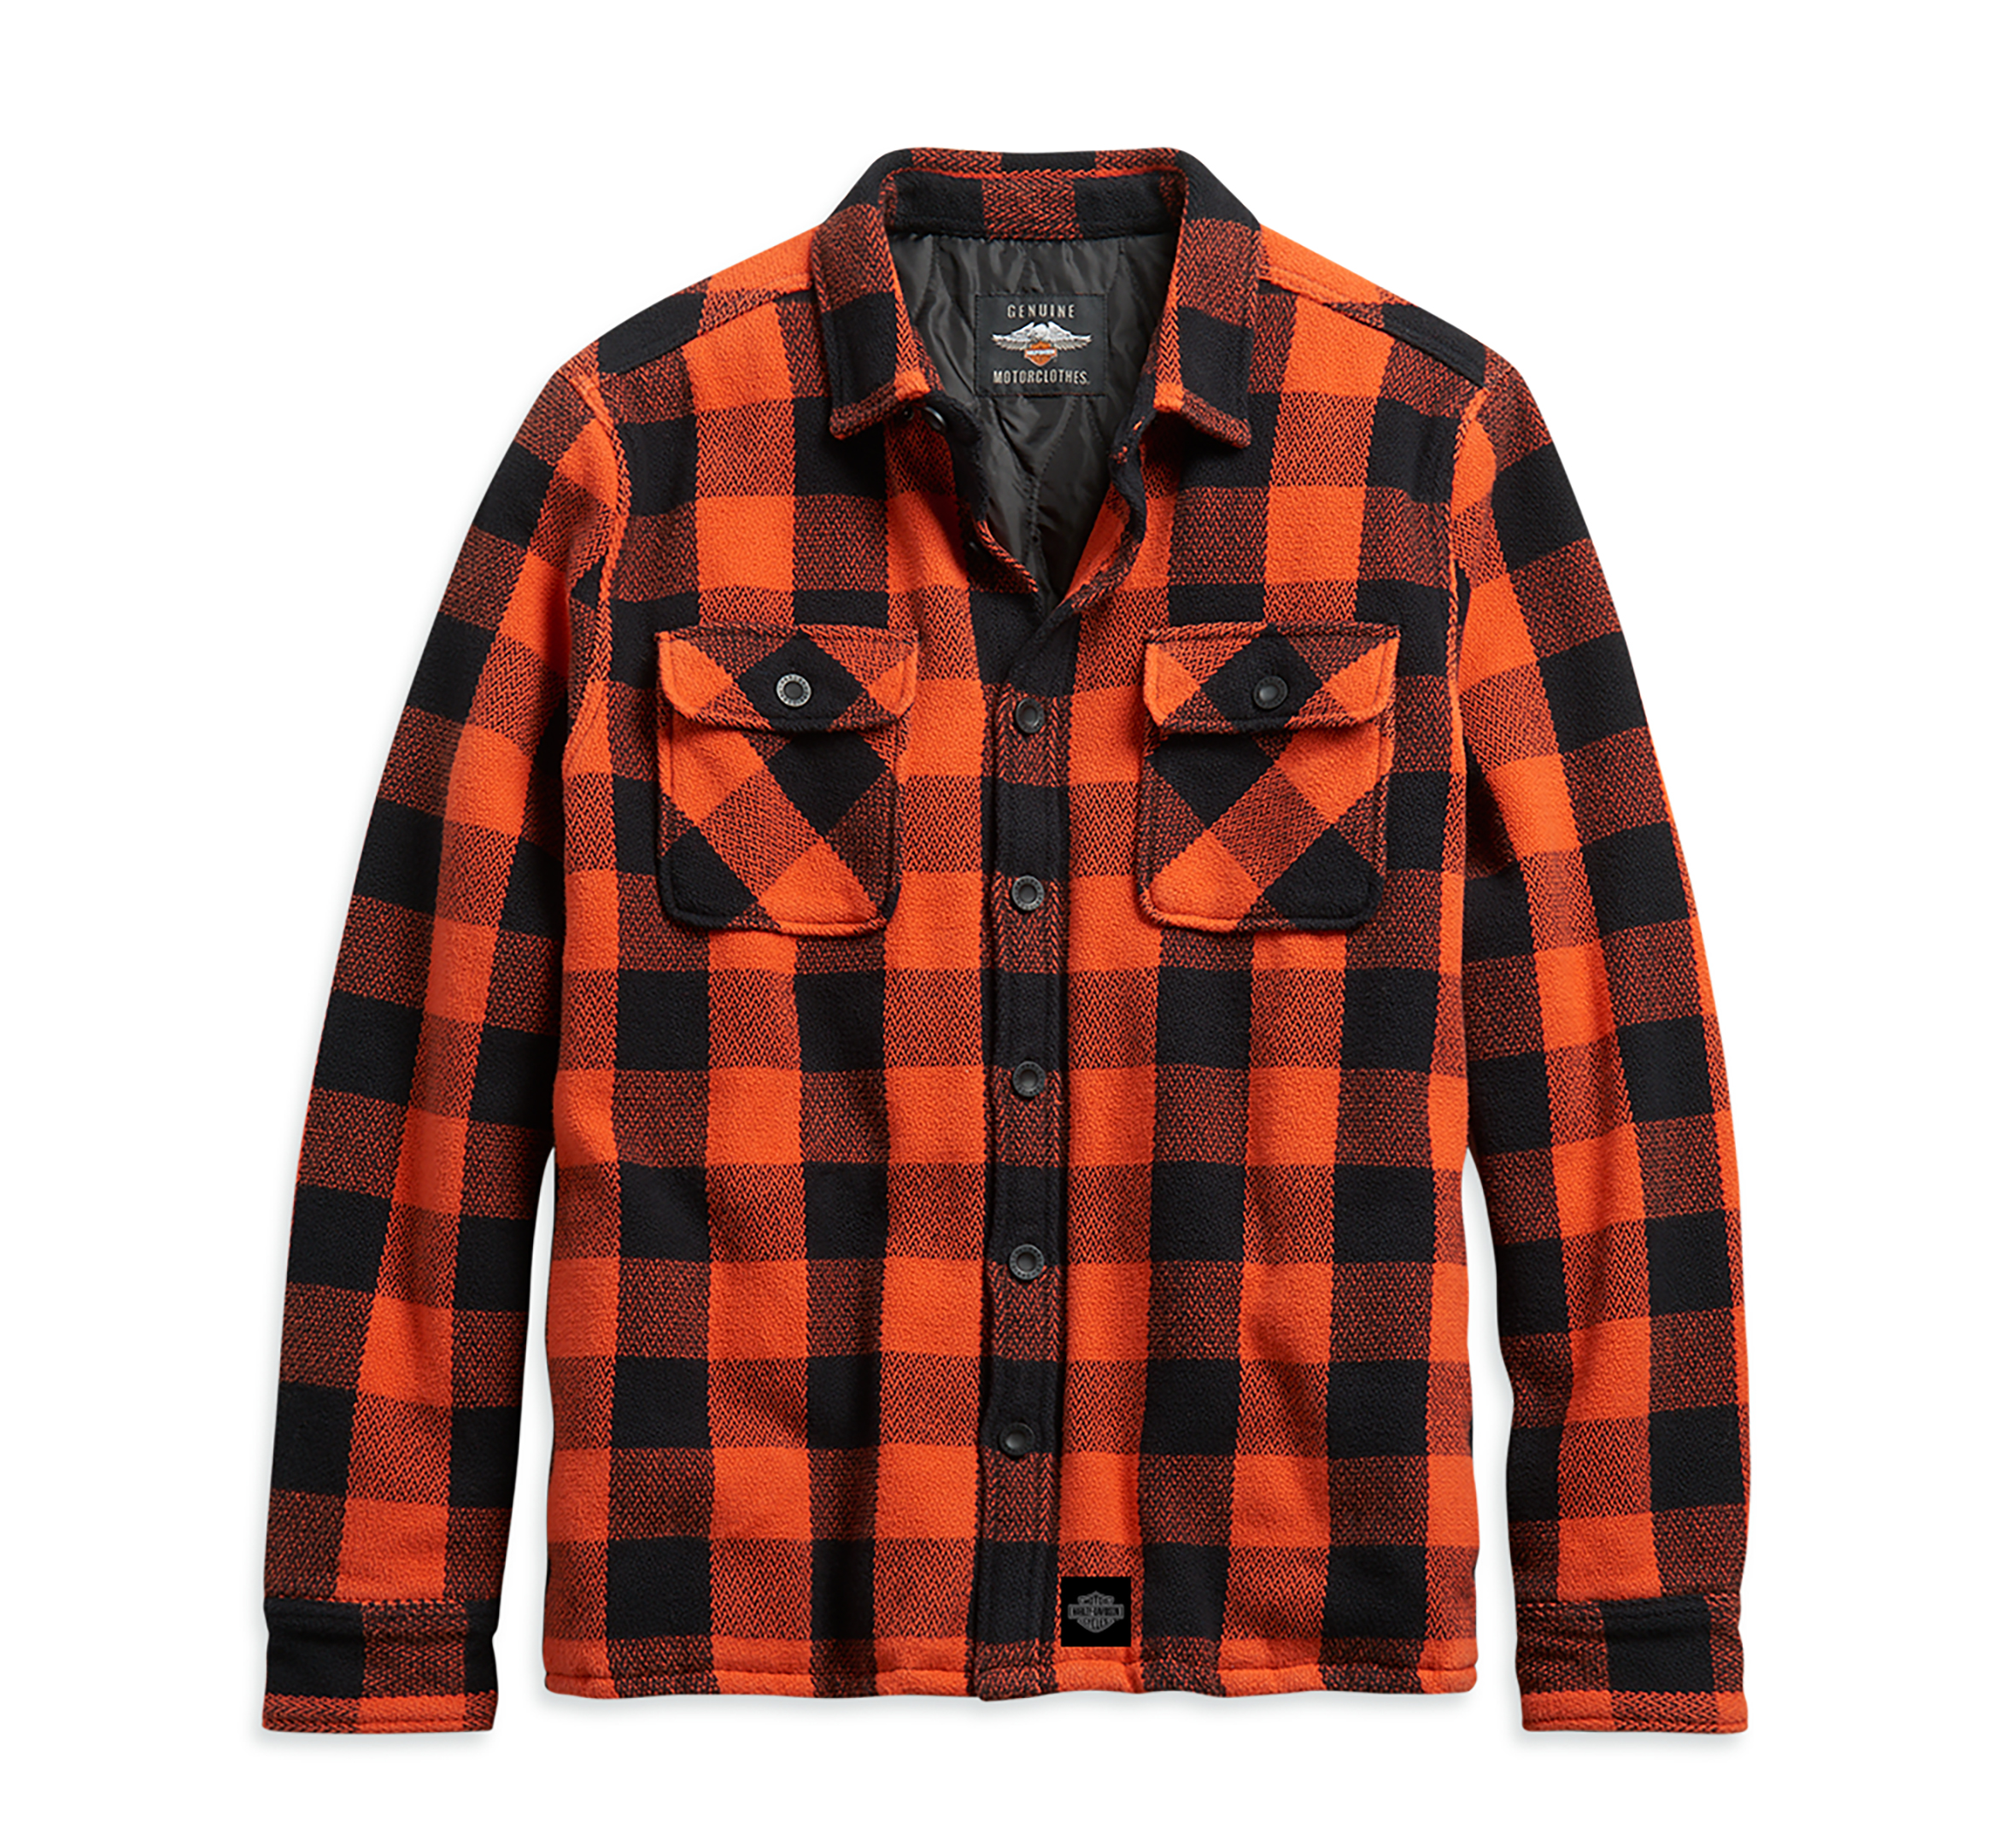 Men's Vintage Plaid Shirt Jacket - 96262-21VM | Harley-Davidson USA